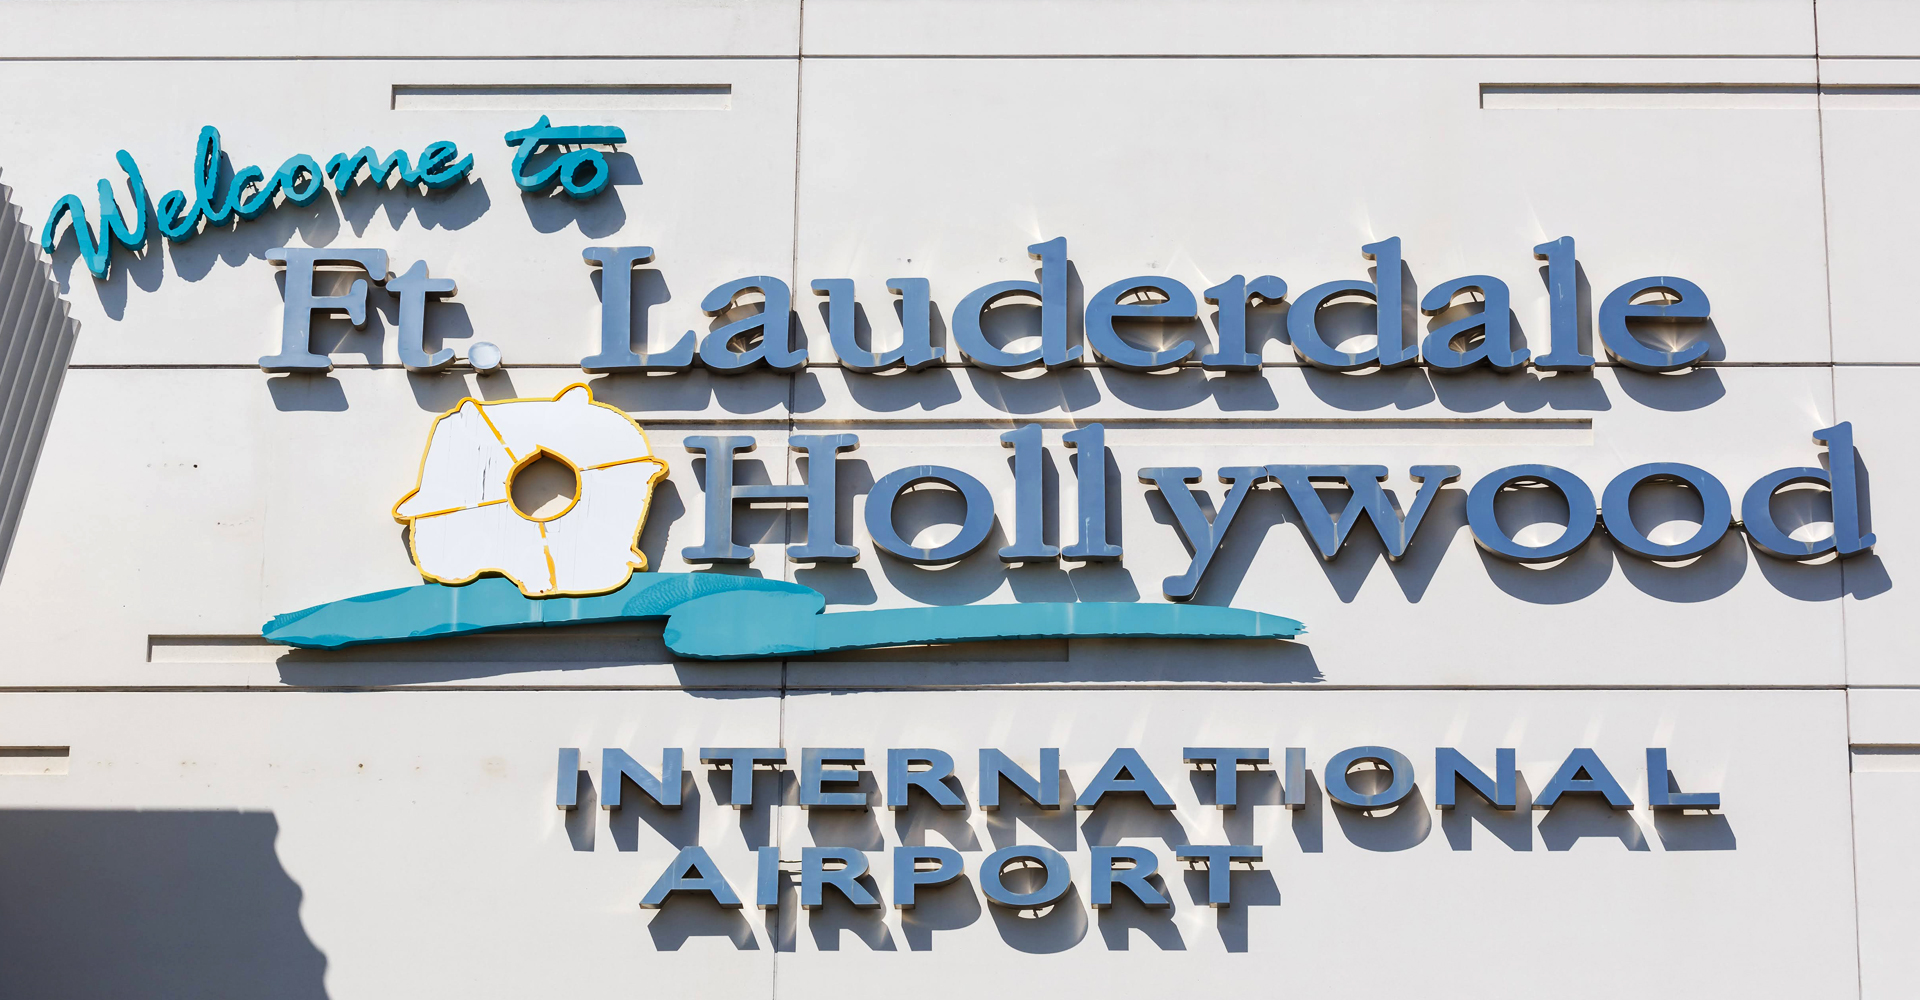 Fort Lauderdale International Airport